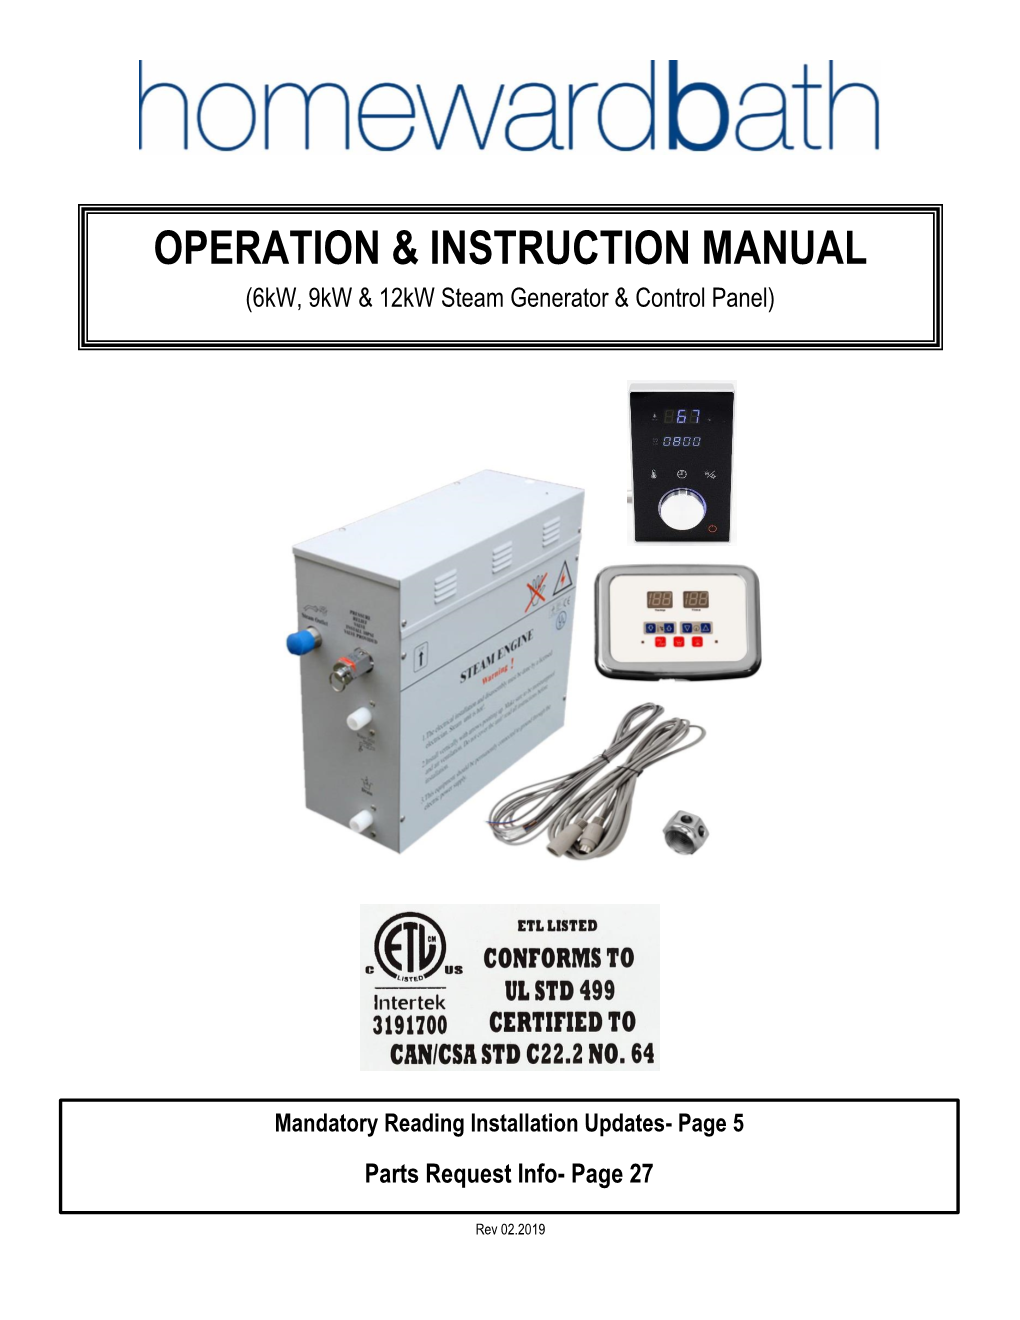 Operation & Instruction Manual